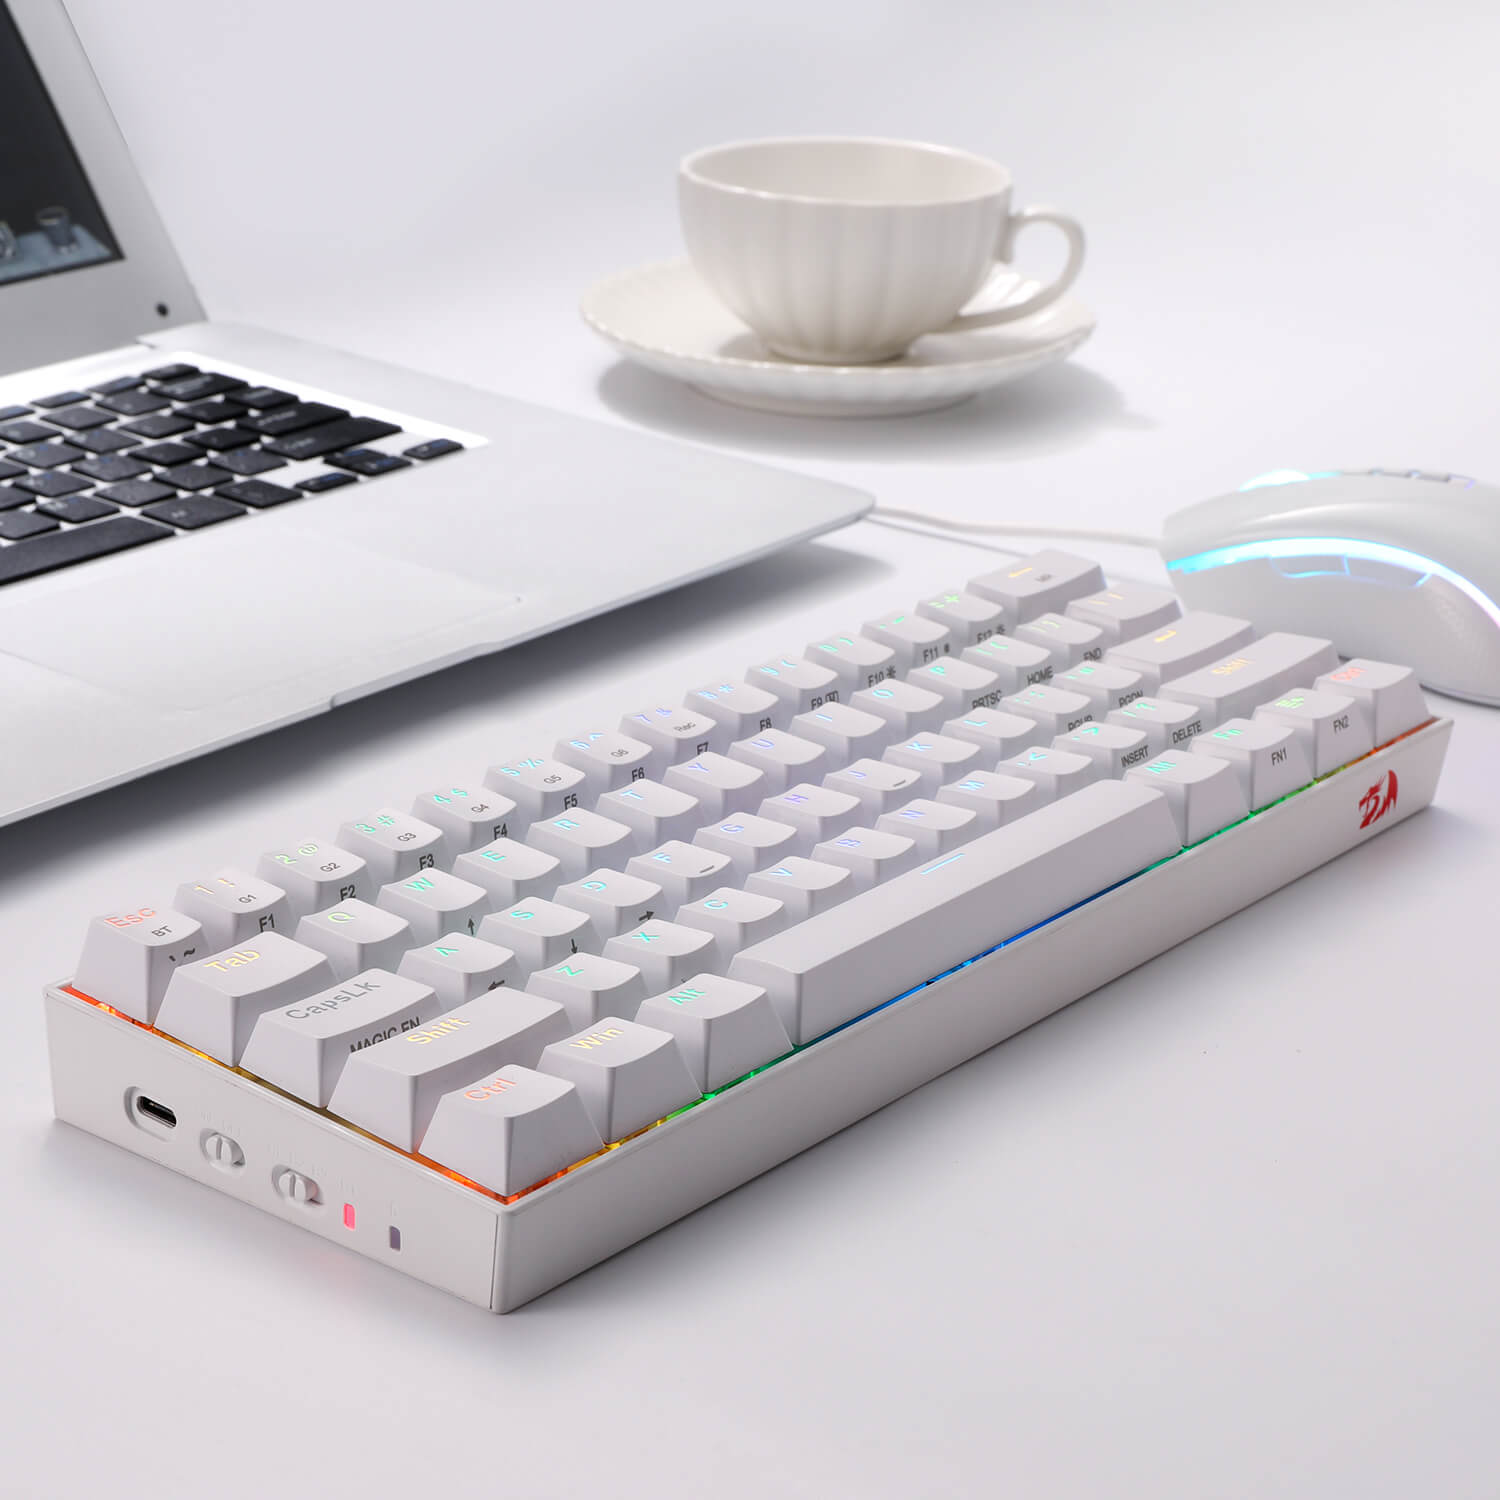 redragon k530 keyboard and m711 white bundle